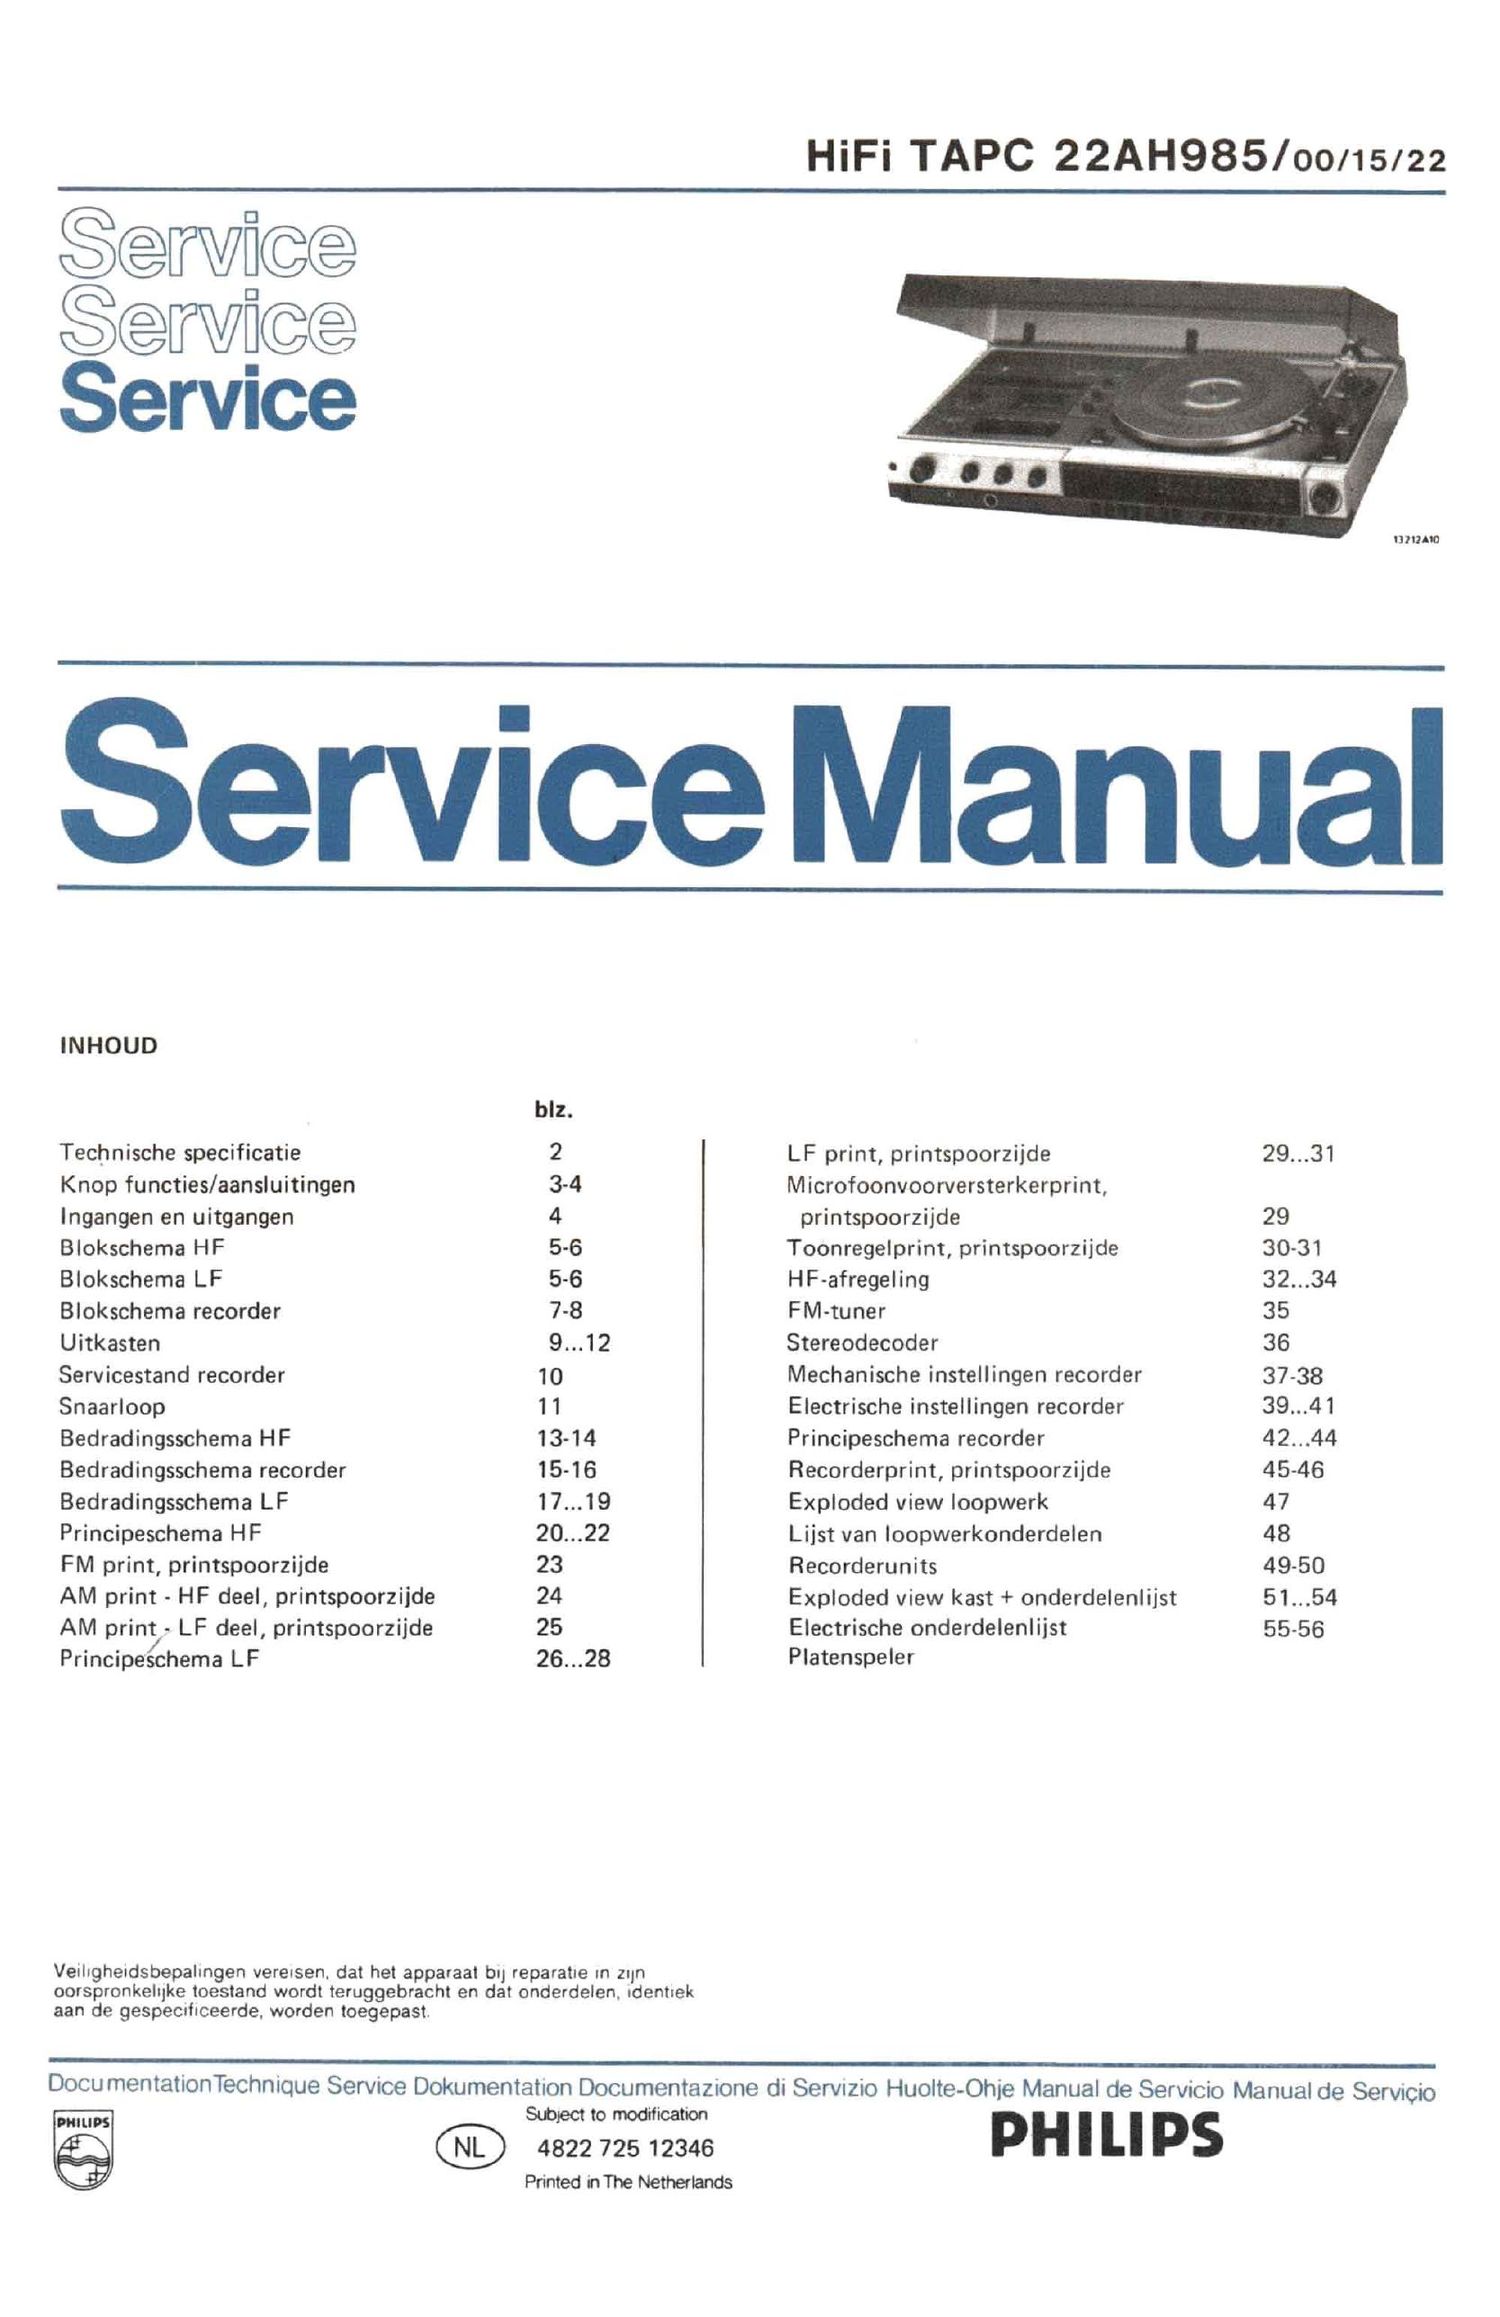 philips 22 ah 985 service manual